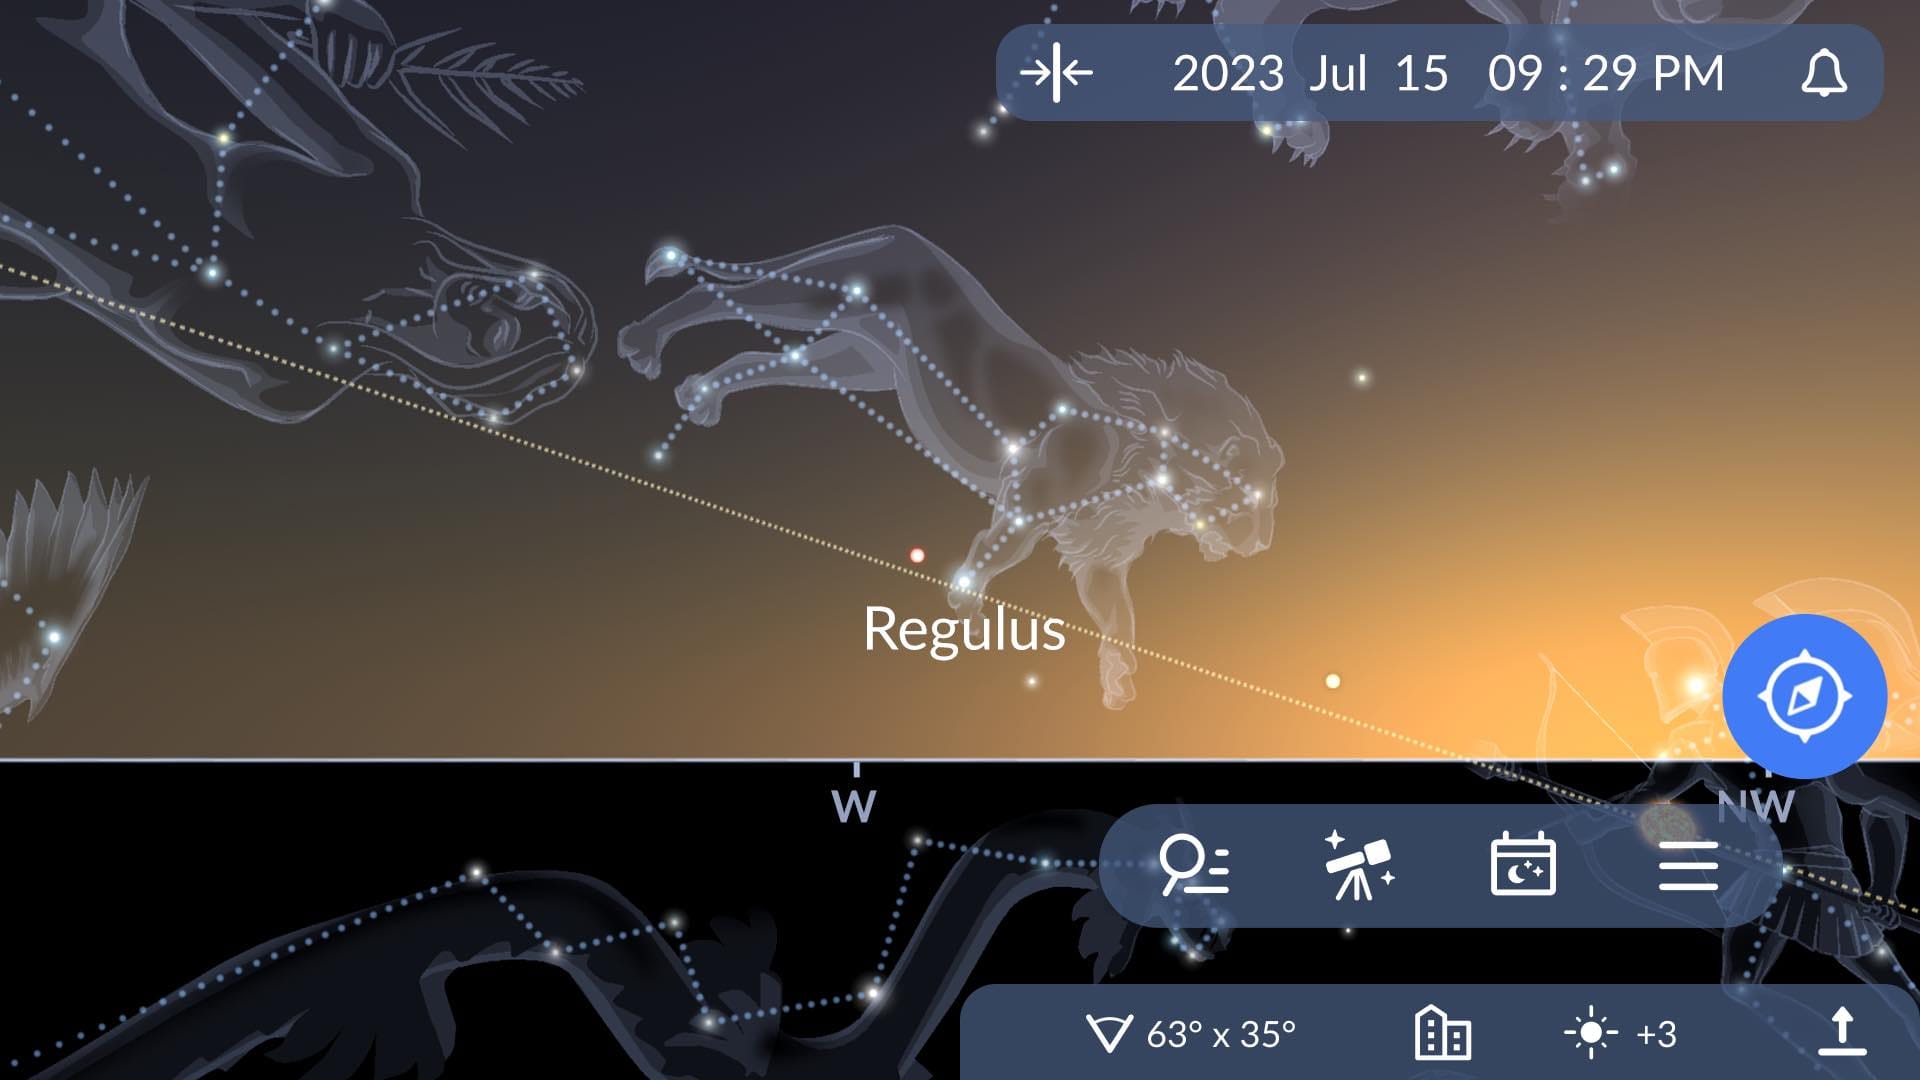 Find Regulus in Sky Tonight